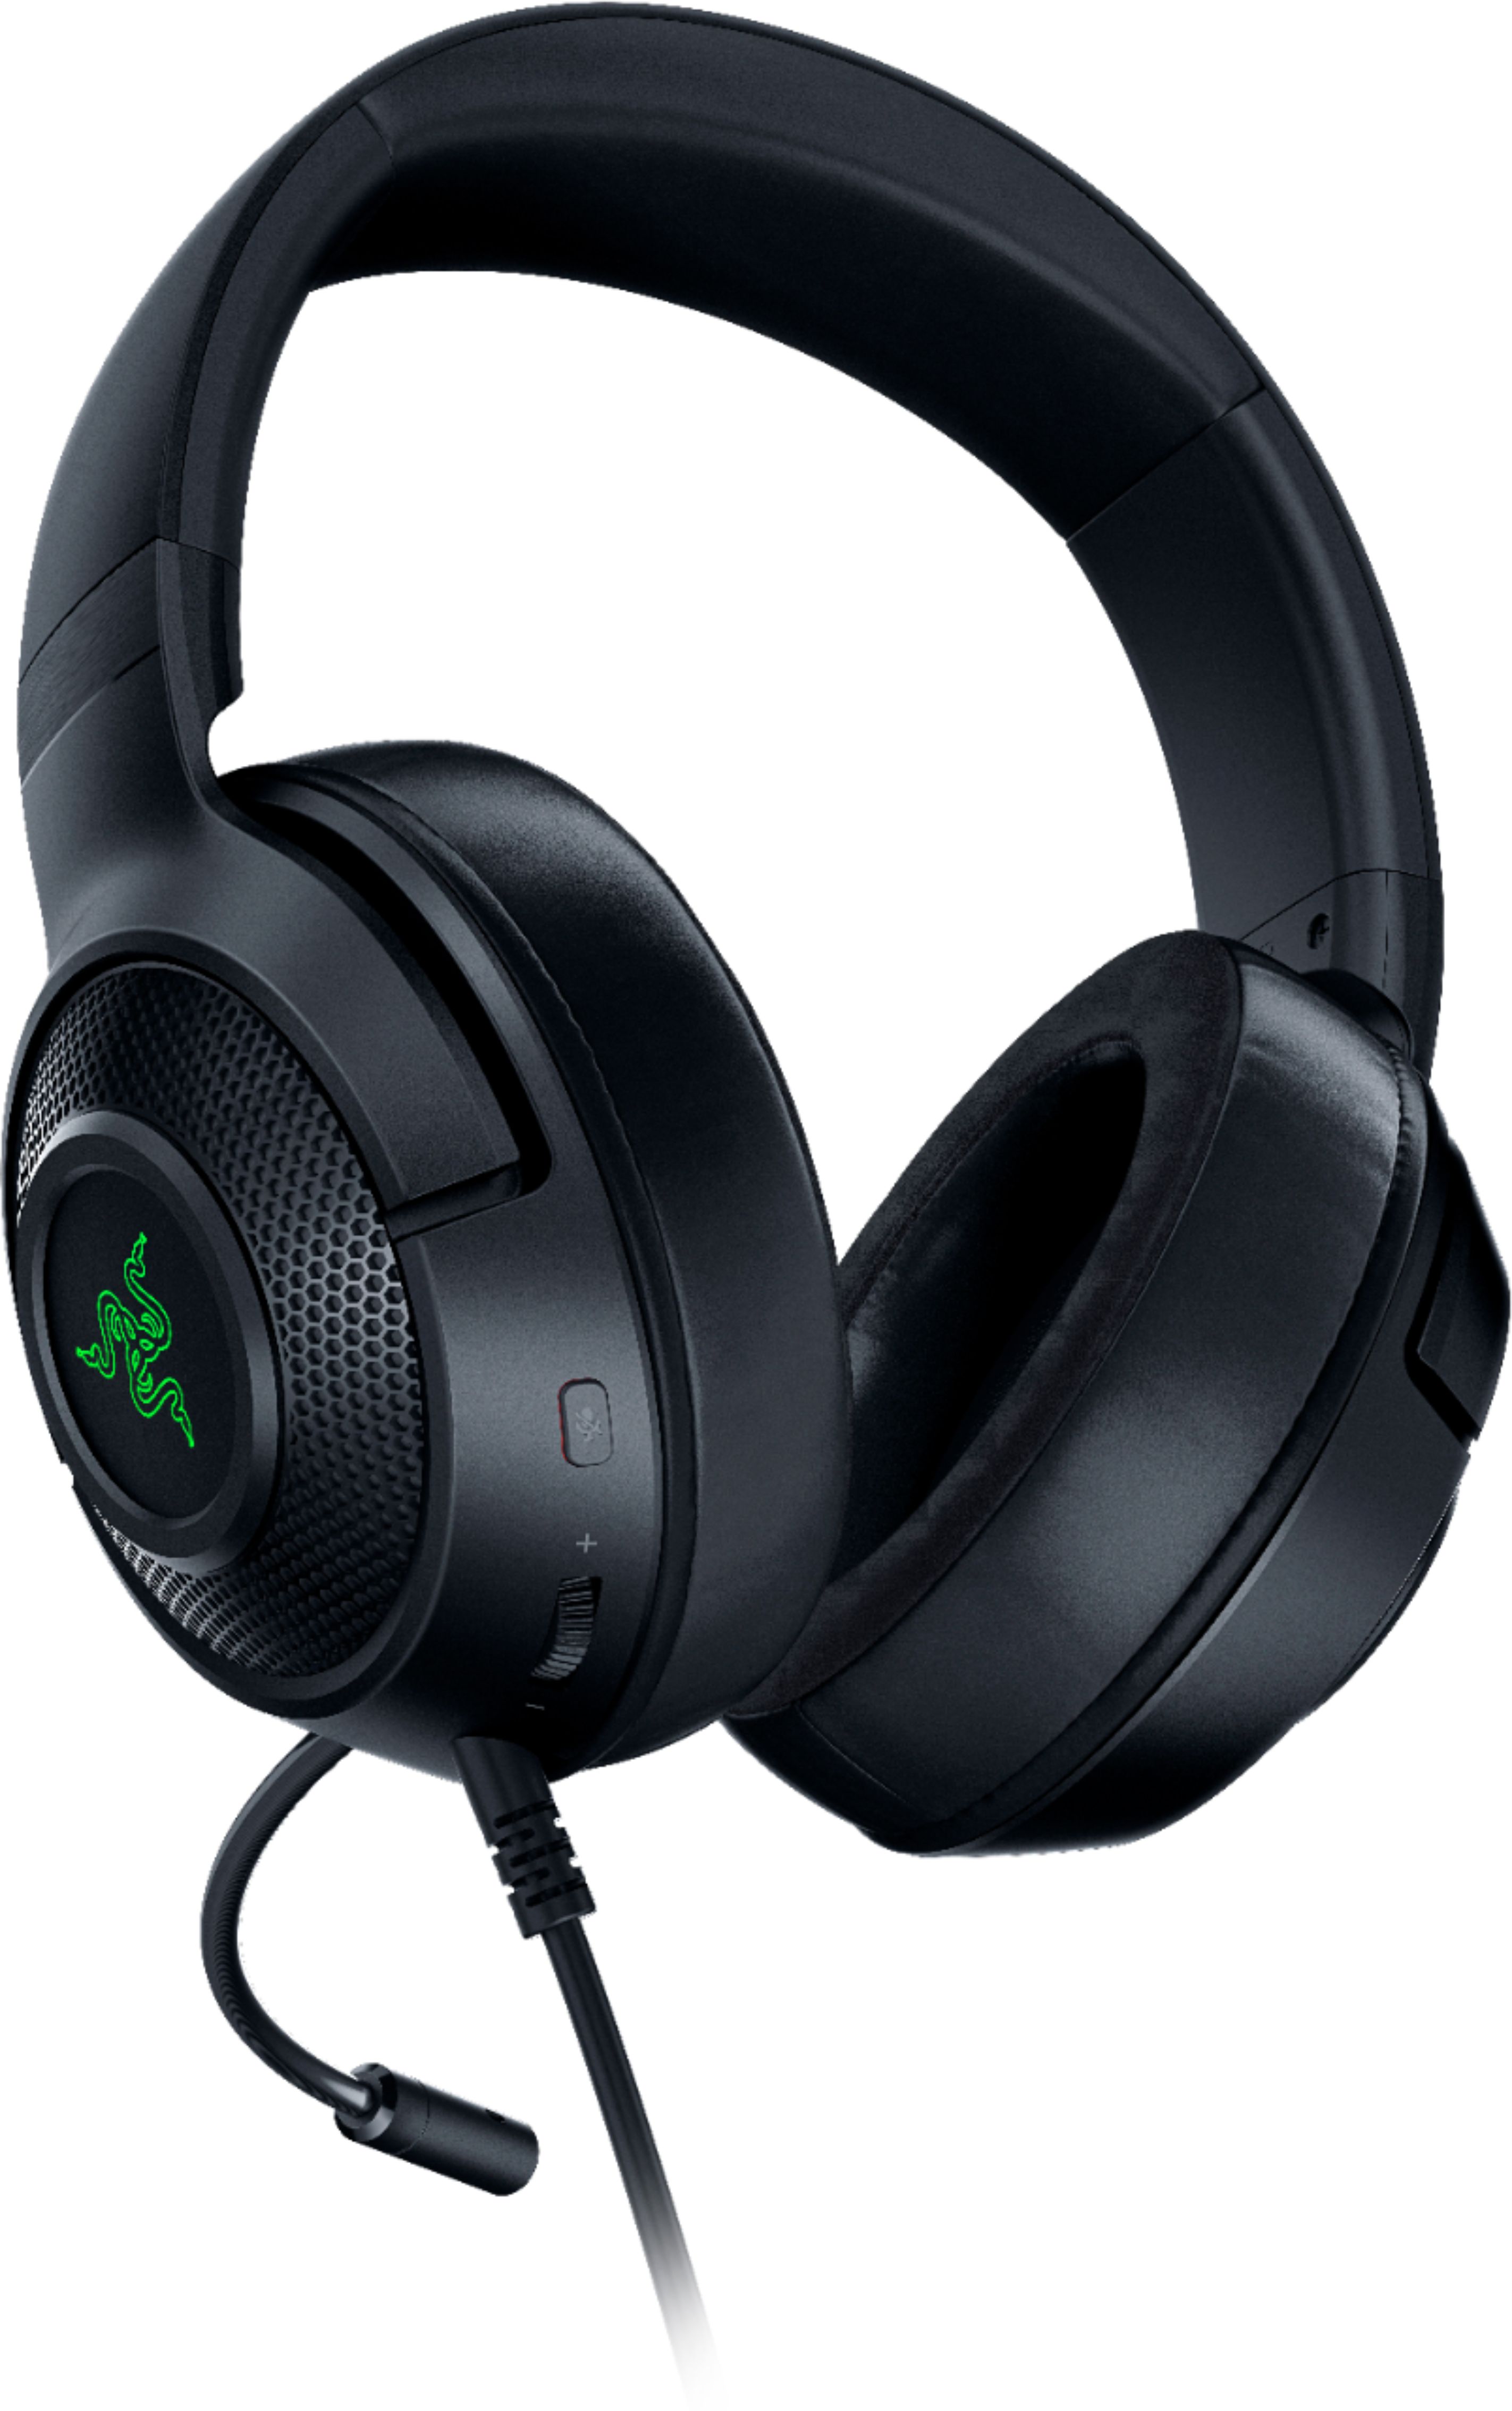 Razer Kraken V3 headset review: Comfortable & great sound - Dexerto